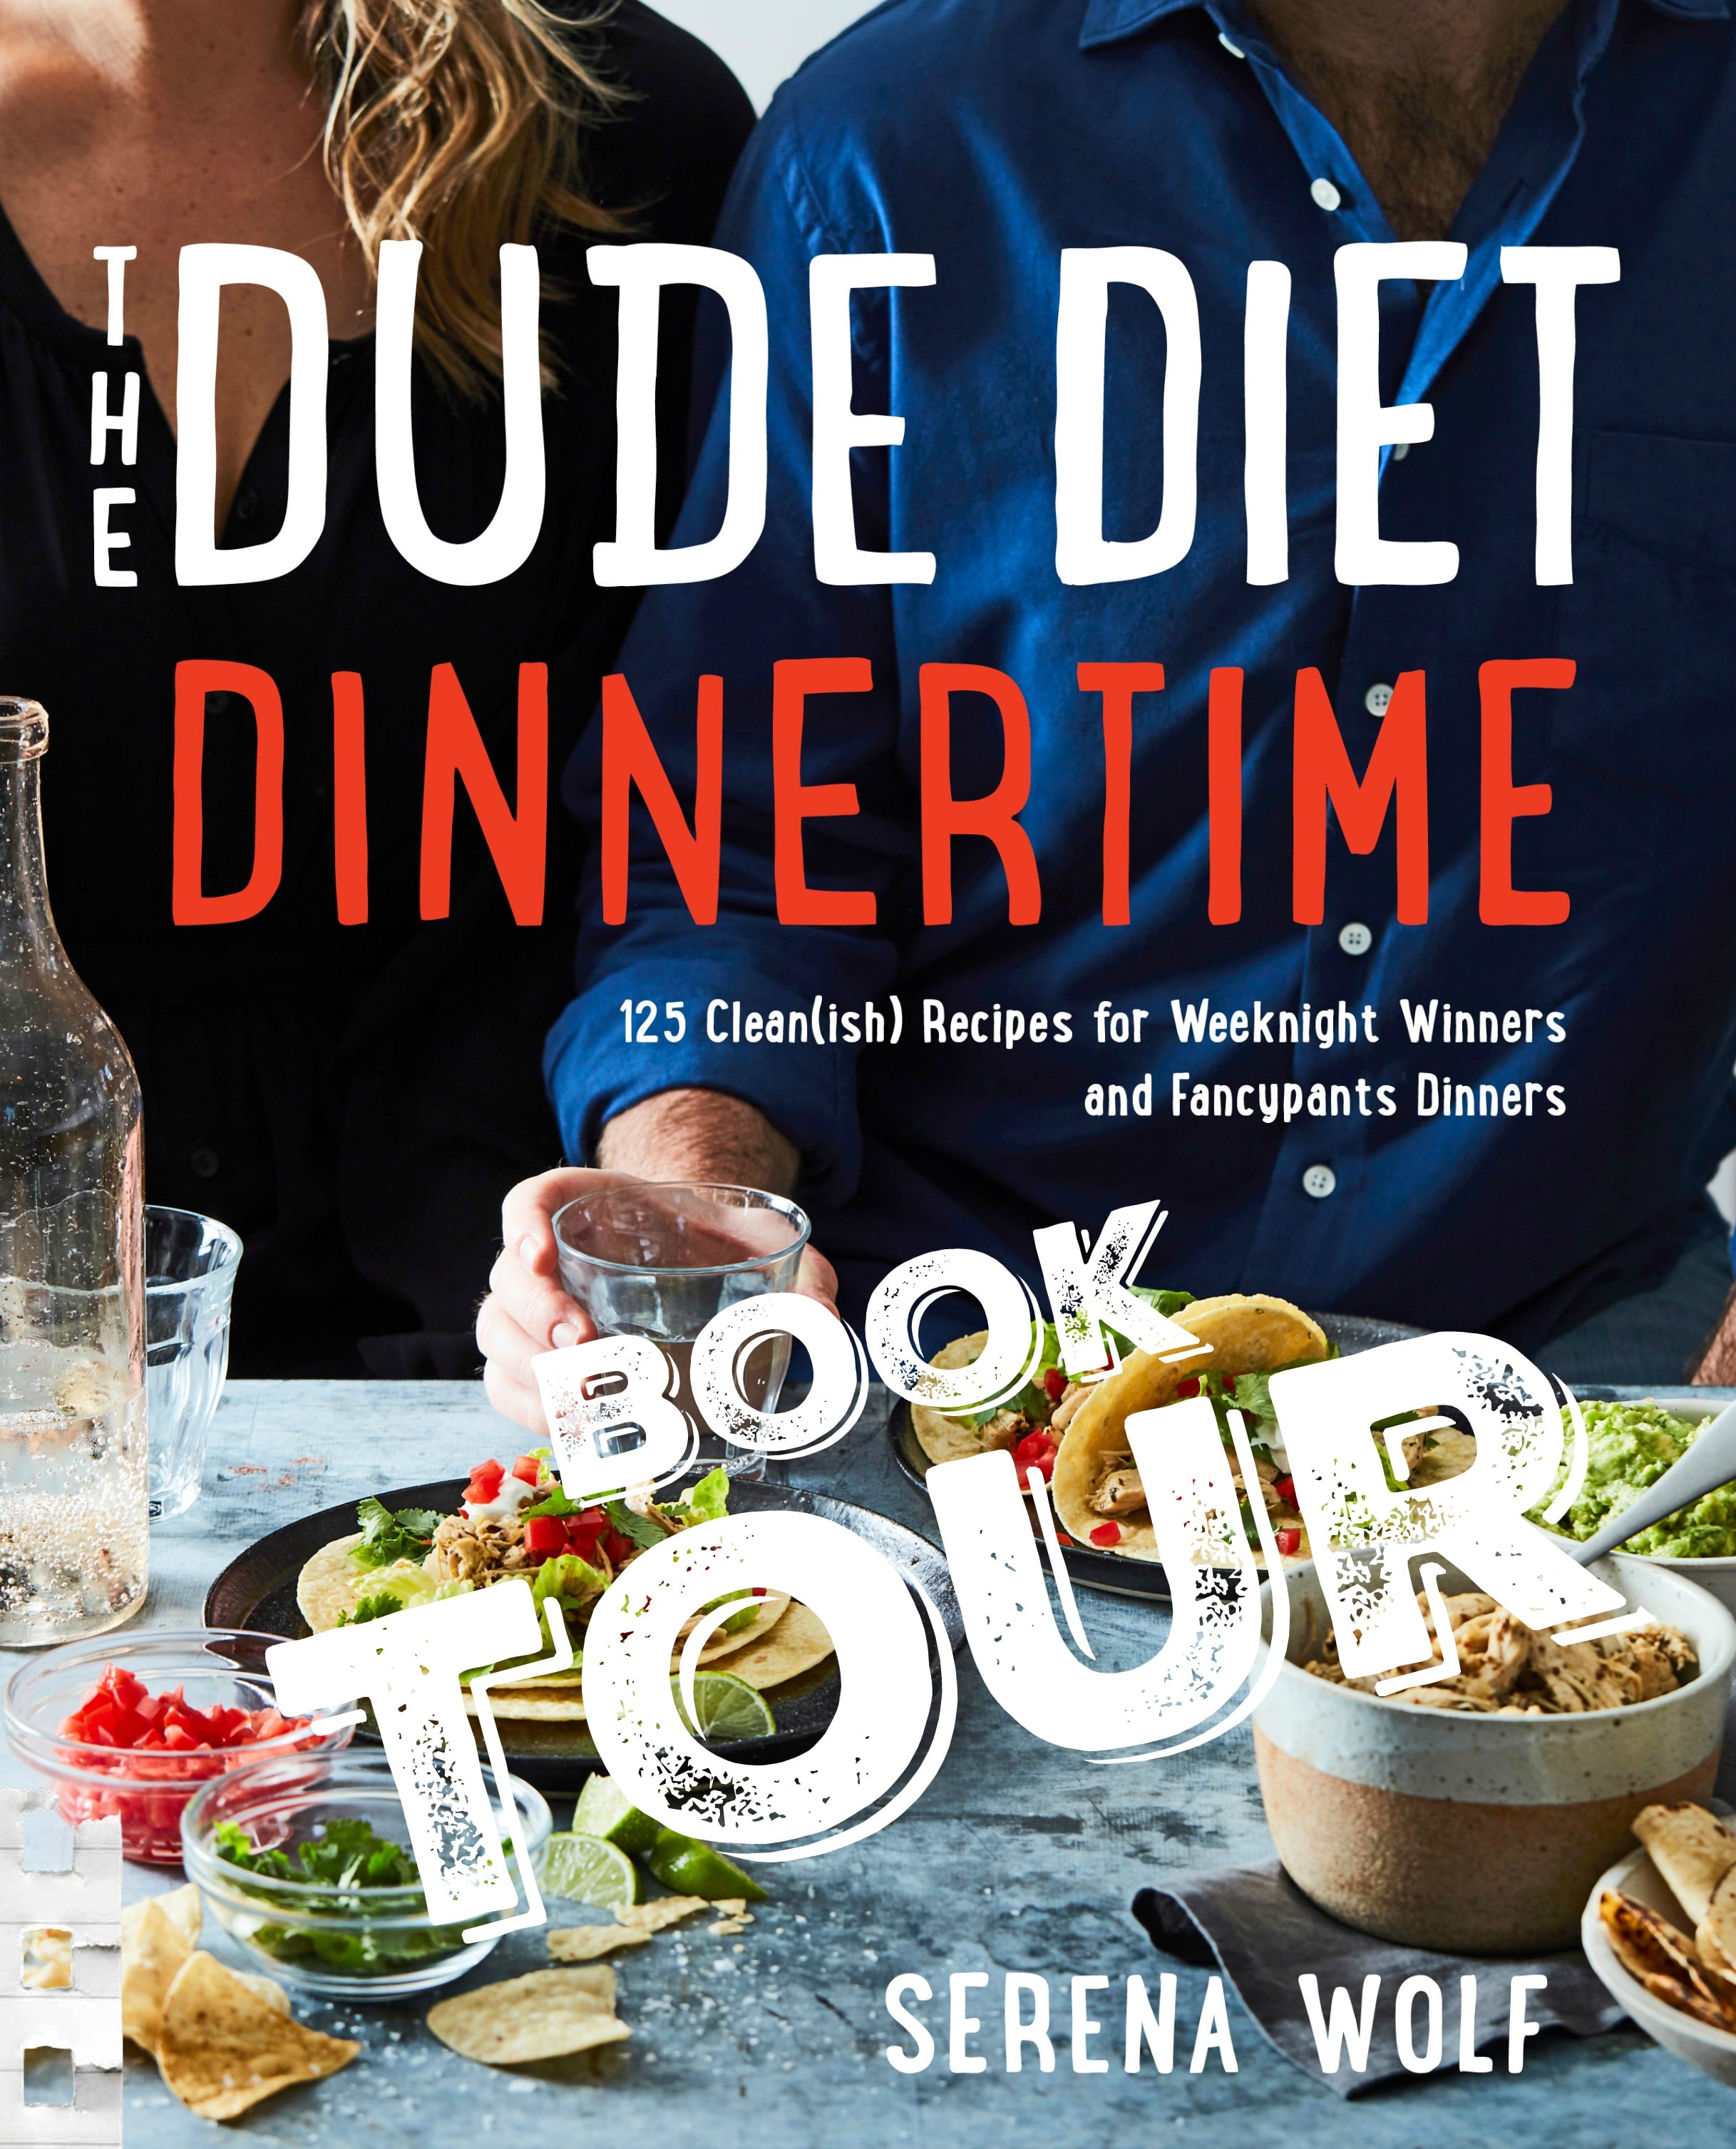 The Dude Diet Dinnertime Book Tour